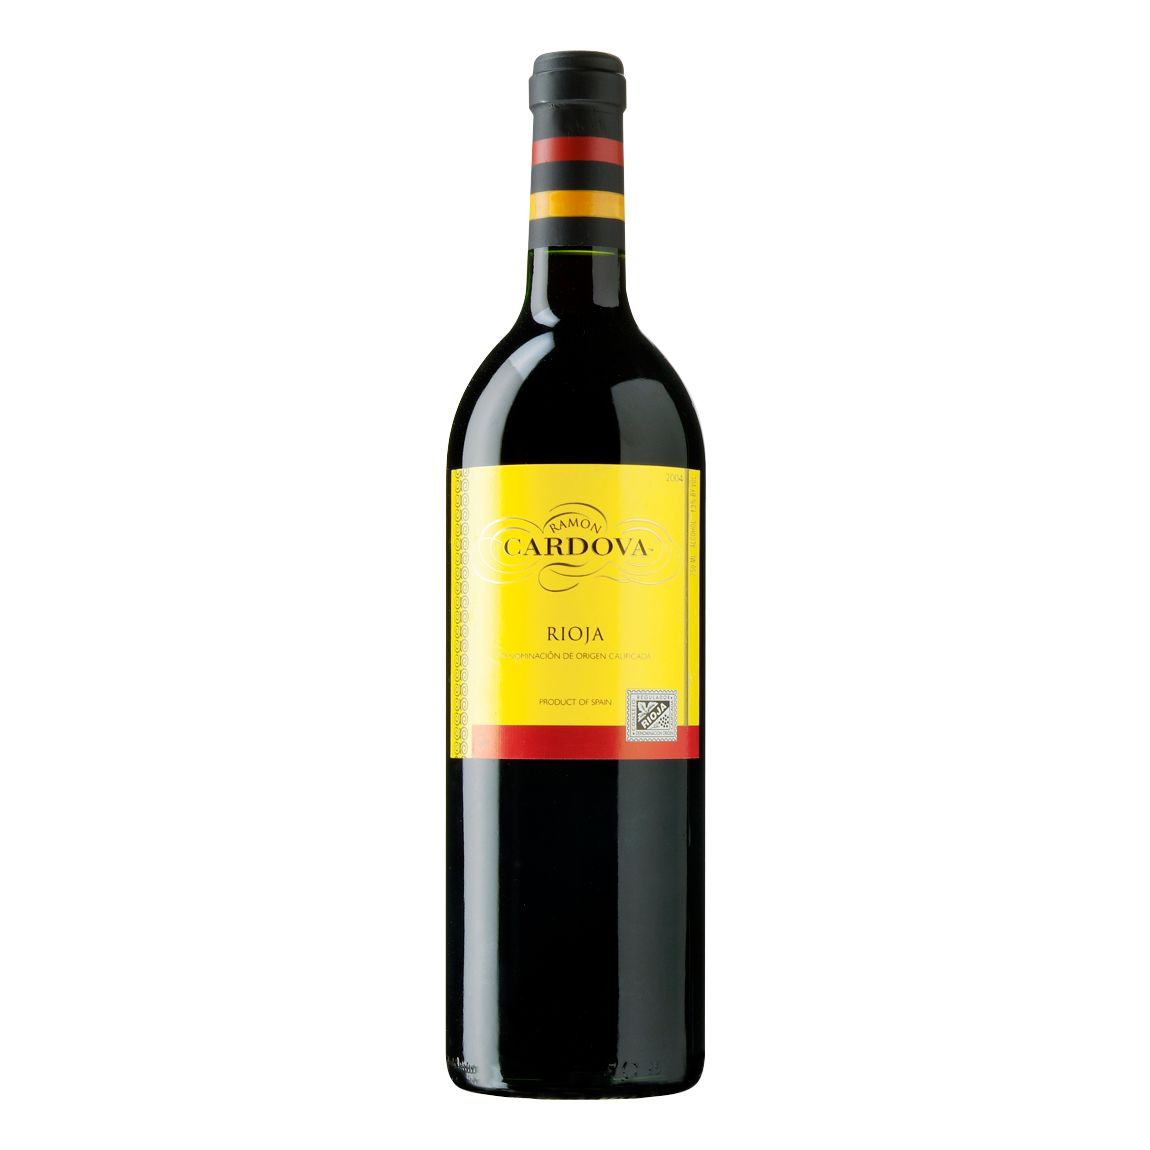 Unbranded Ramon Cardova Rioja 2003/04, Spain (Kosher Wine)